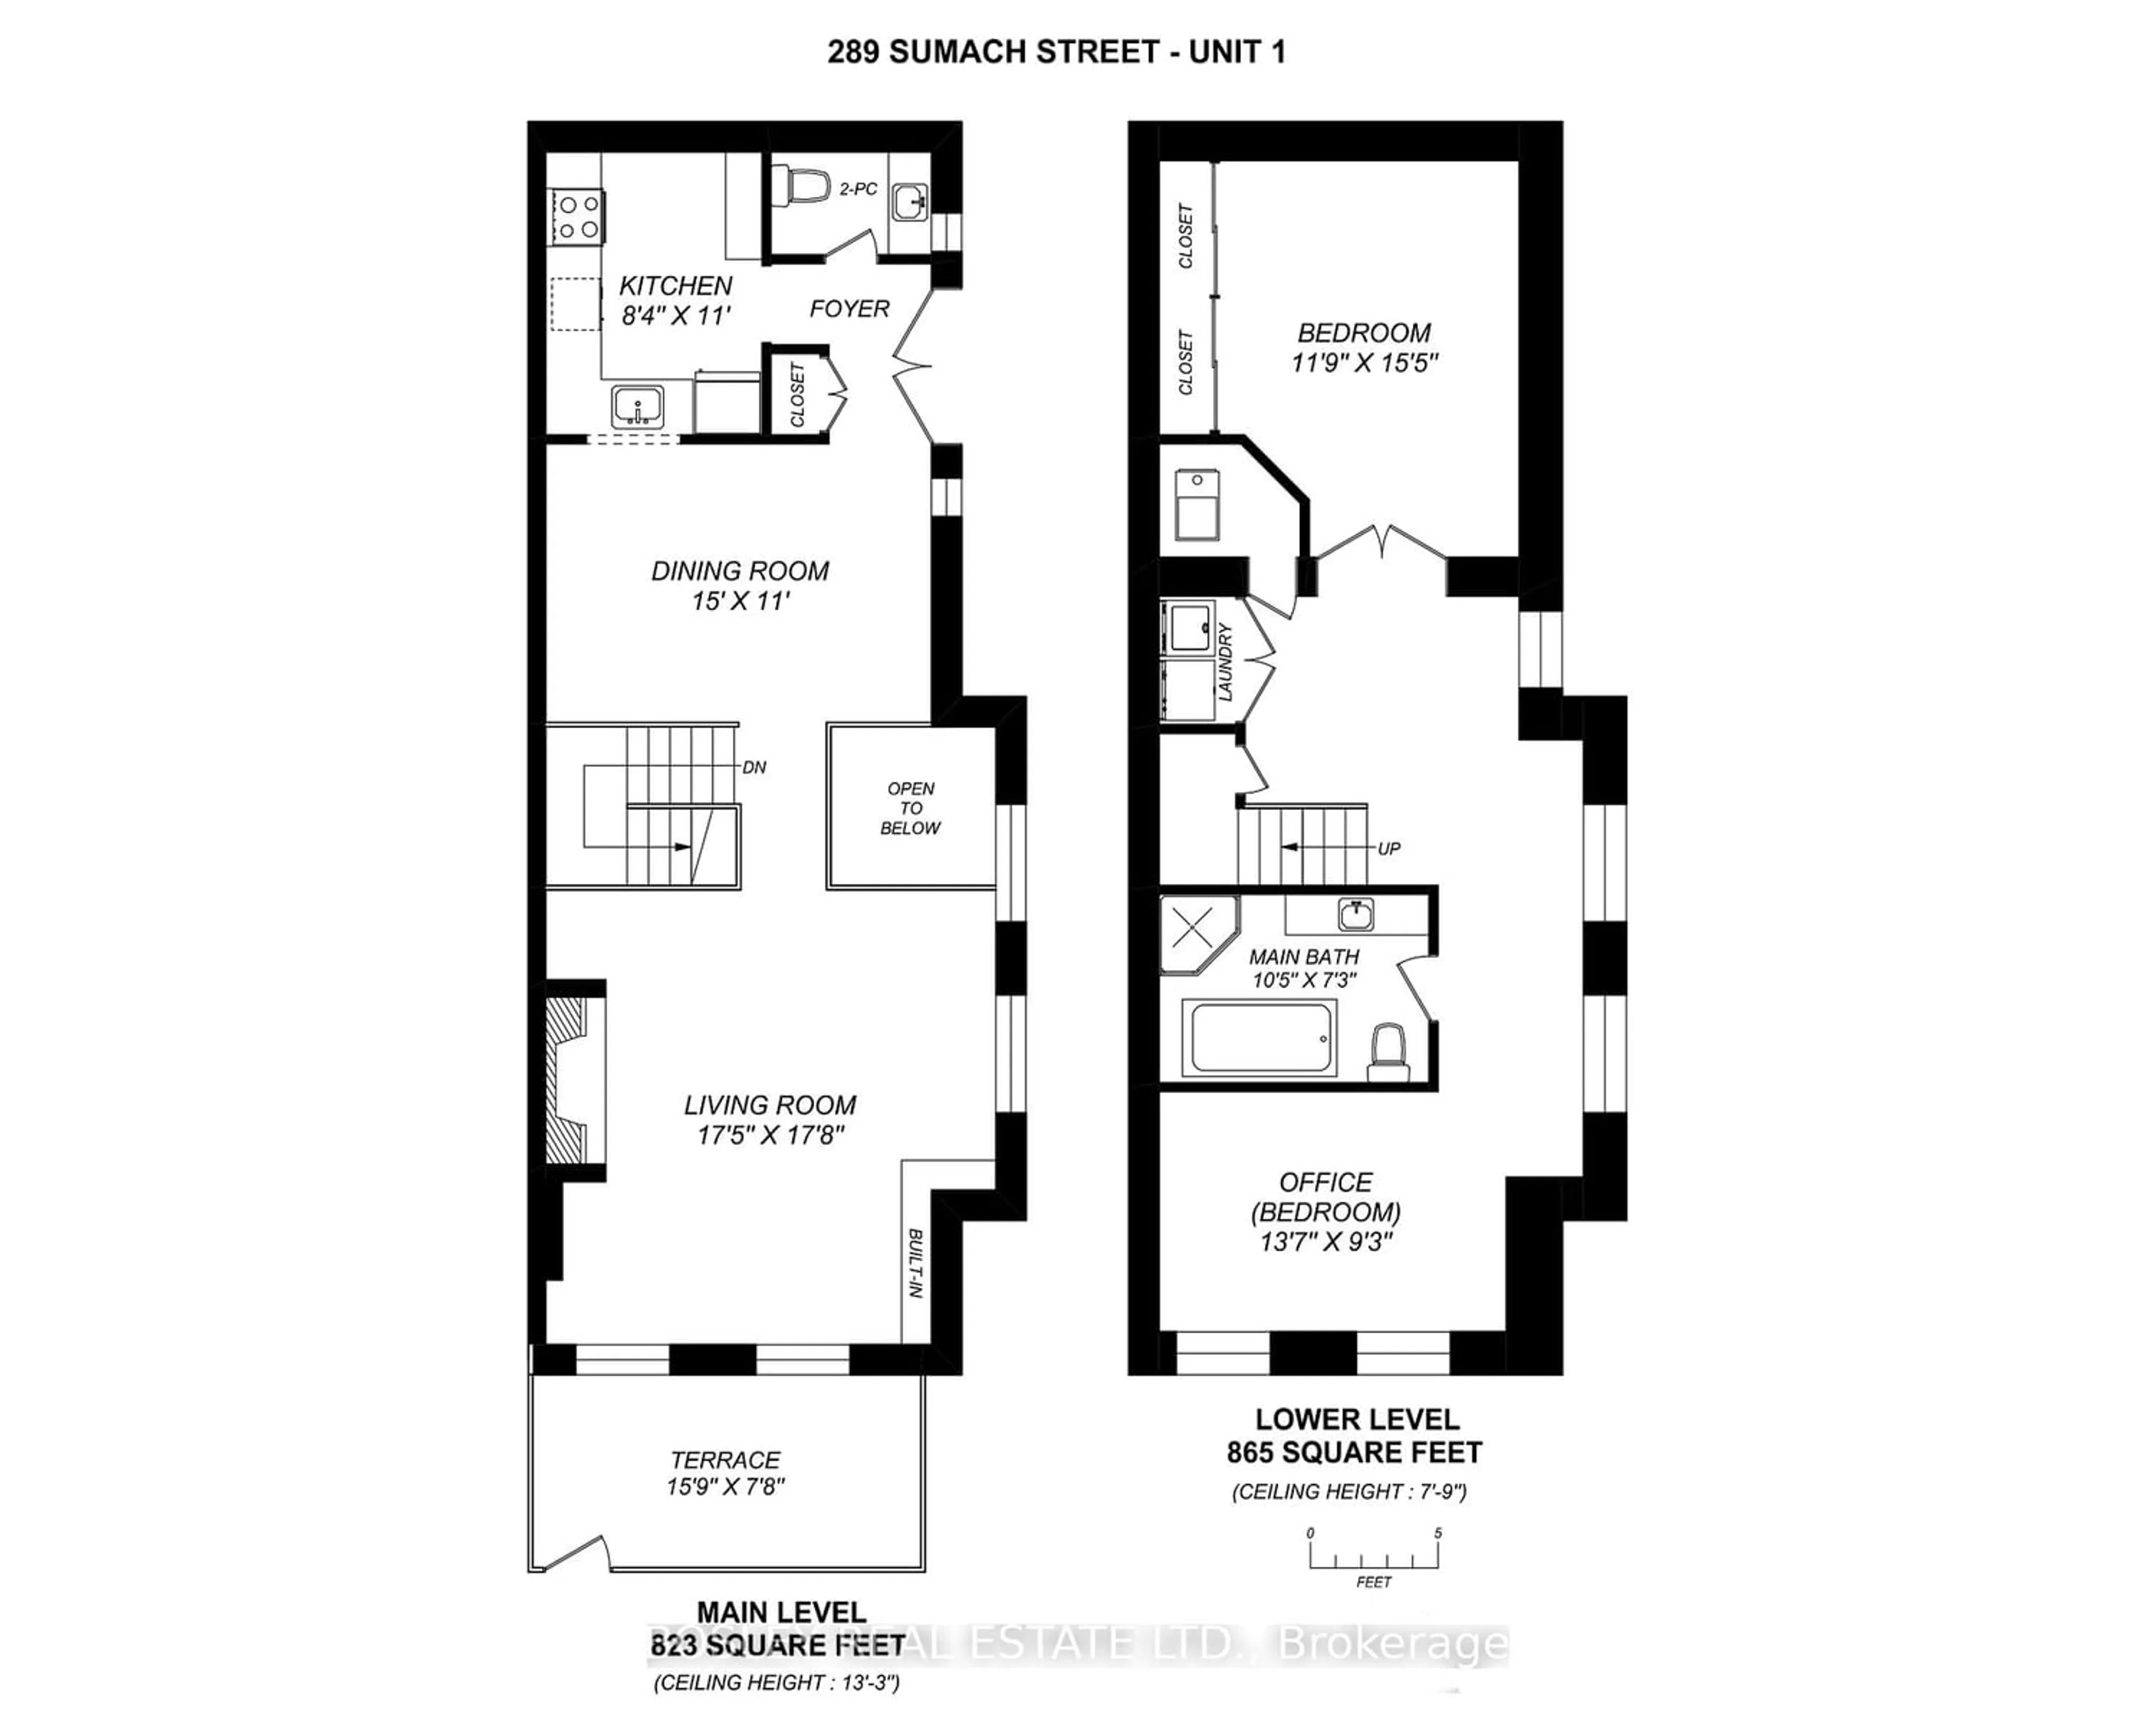 Floor plan for 289 Sumach St #1, Toronto Ontario M5A 3K4